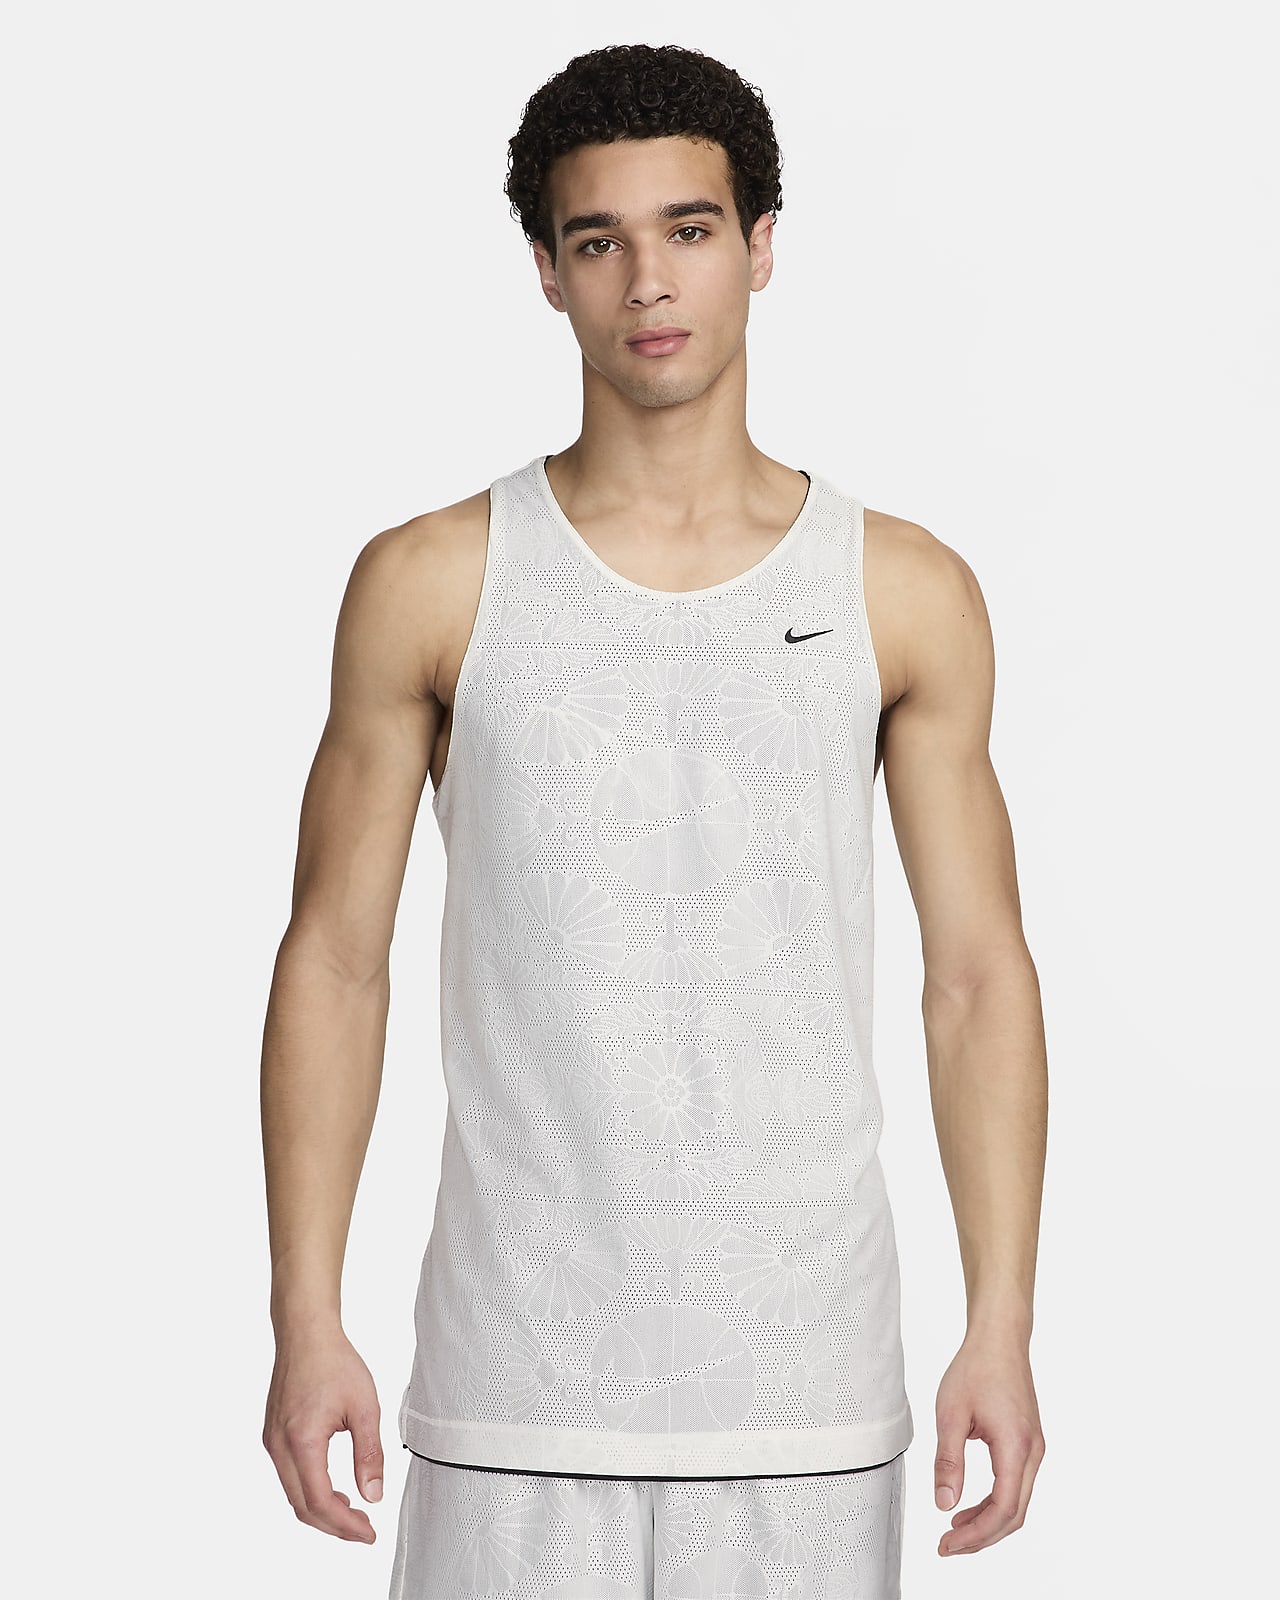 Jersey de básquetbol Dri-FIT reversible para hombre Nike Standard Issue